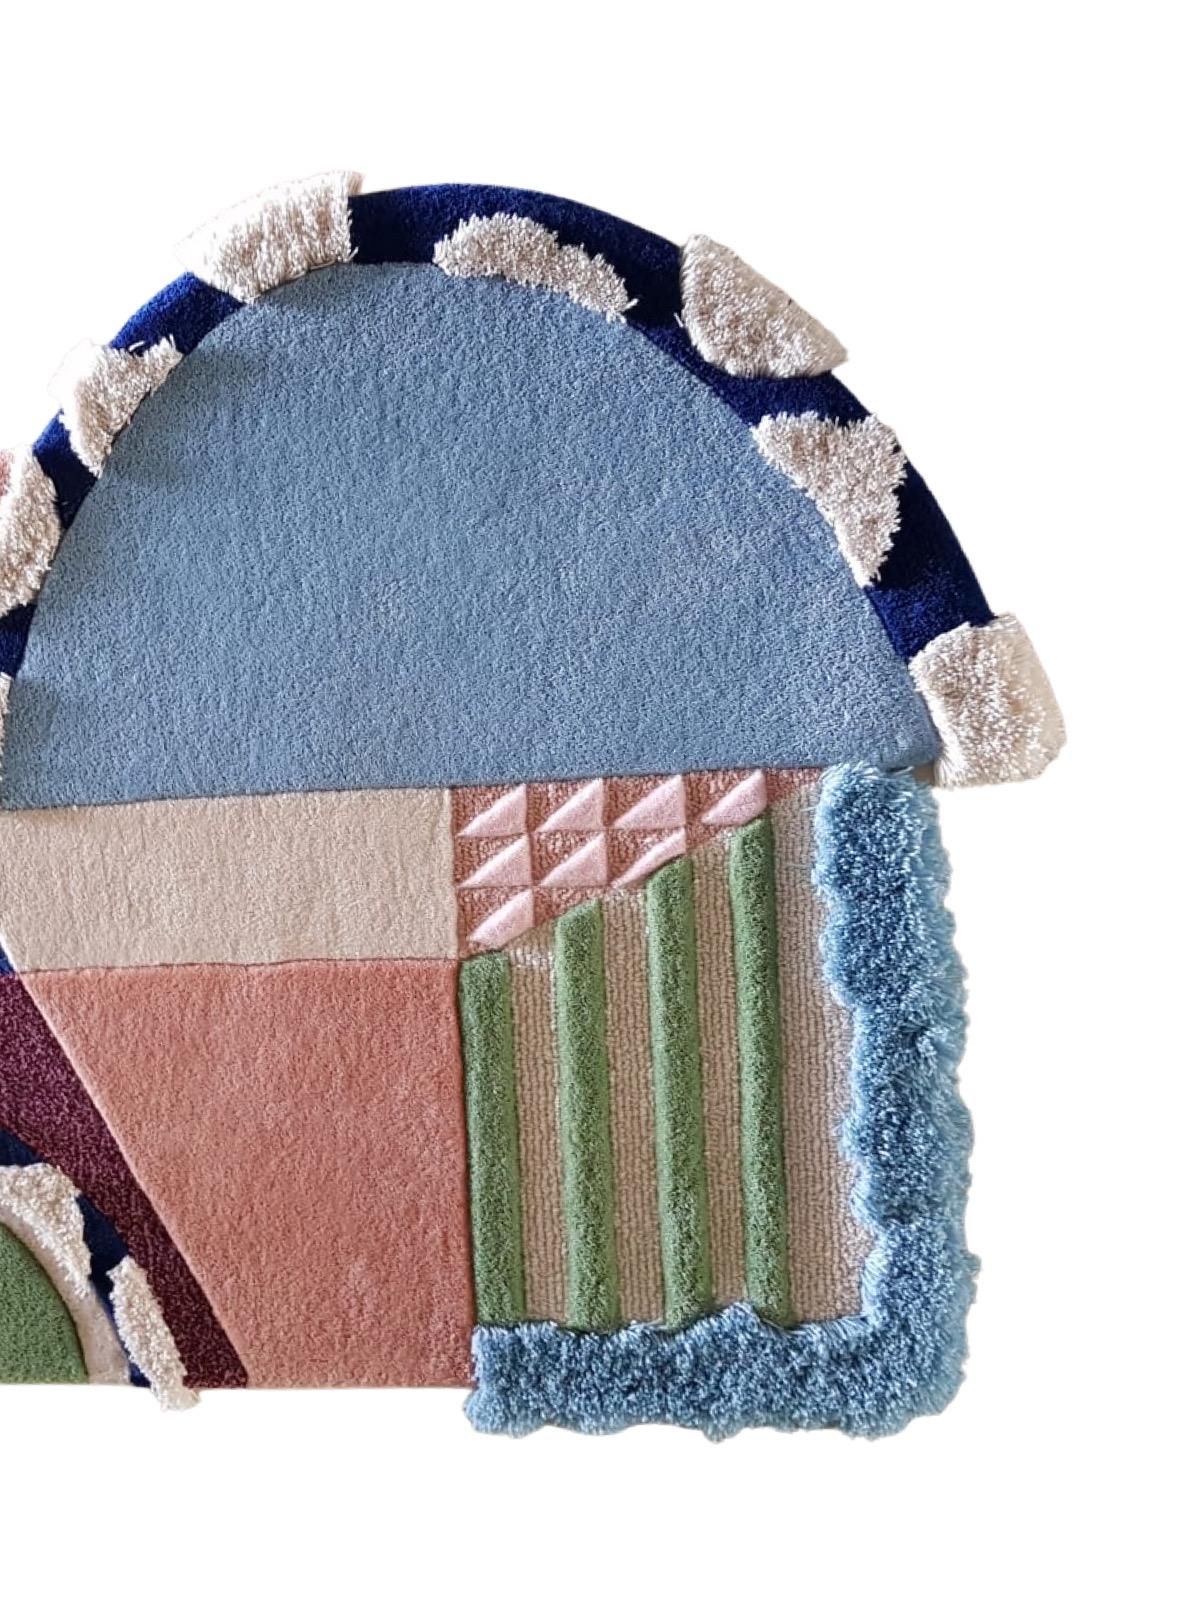 Carved Irregular Shape Viscose Wool Rug Pink Blush, Blue, Green 'IRO-IRO' by RAG Home For Sale